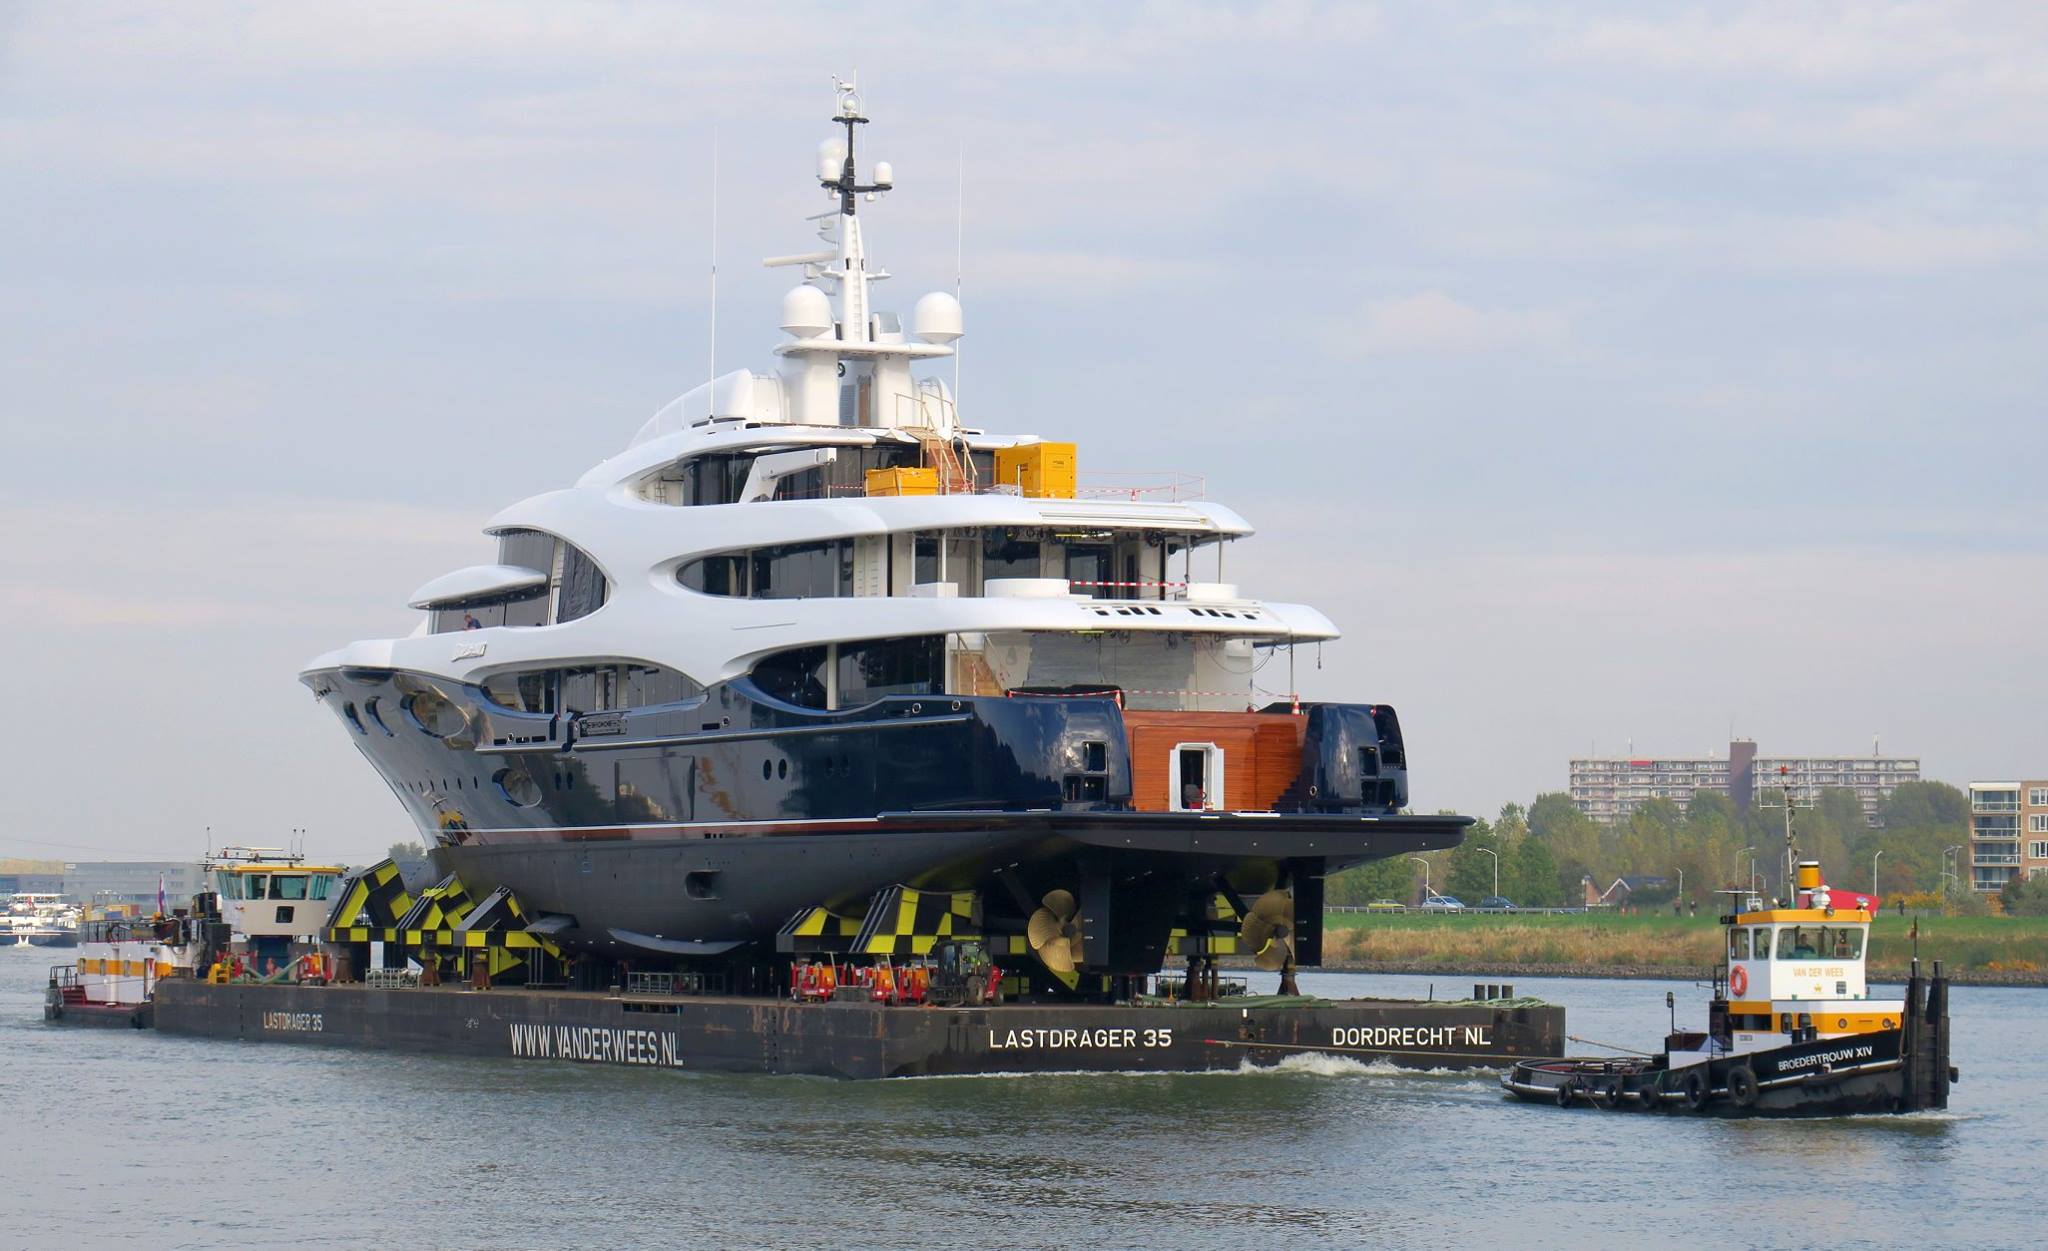 yachttransport holland